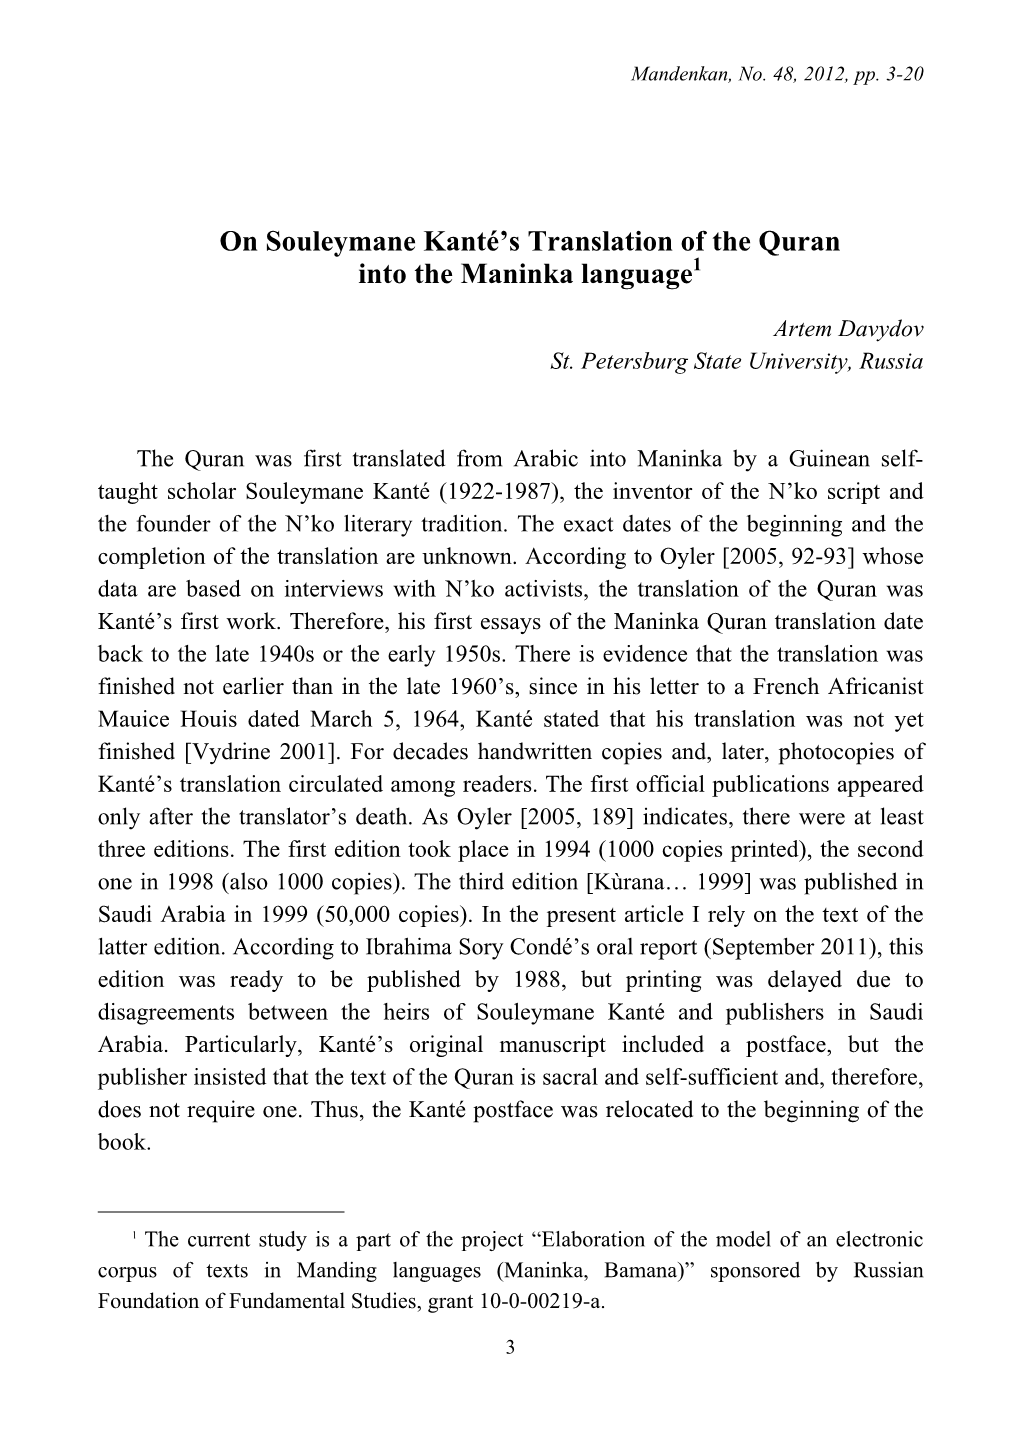 On Souleymane Kanté's Translation of the Quran Into the Maninka Language